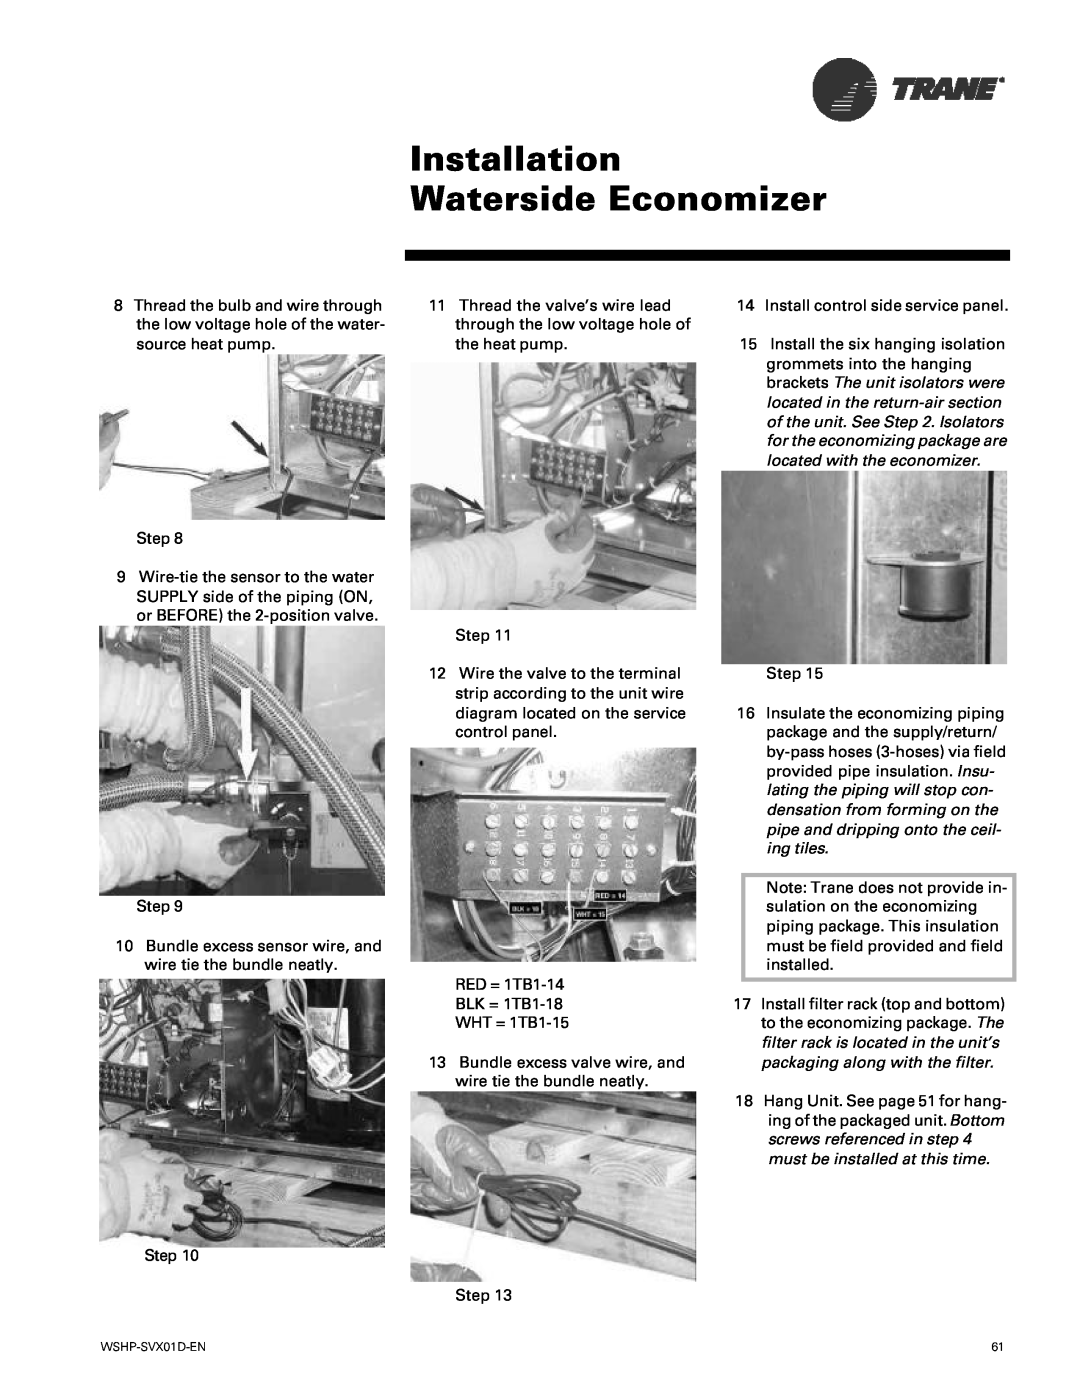 Trane GEV, GEH manual Installation Waterside Economizer, Step 